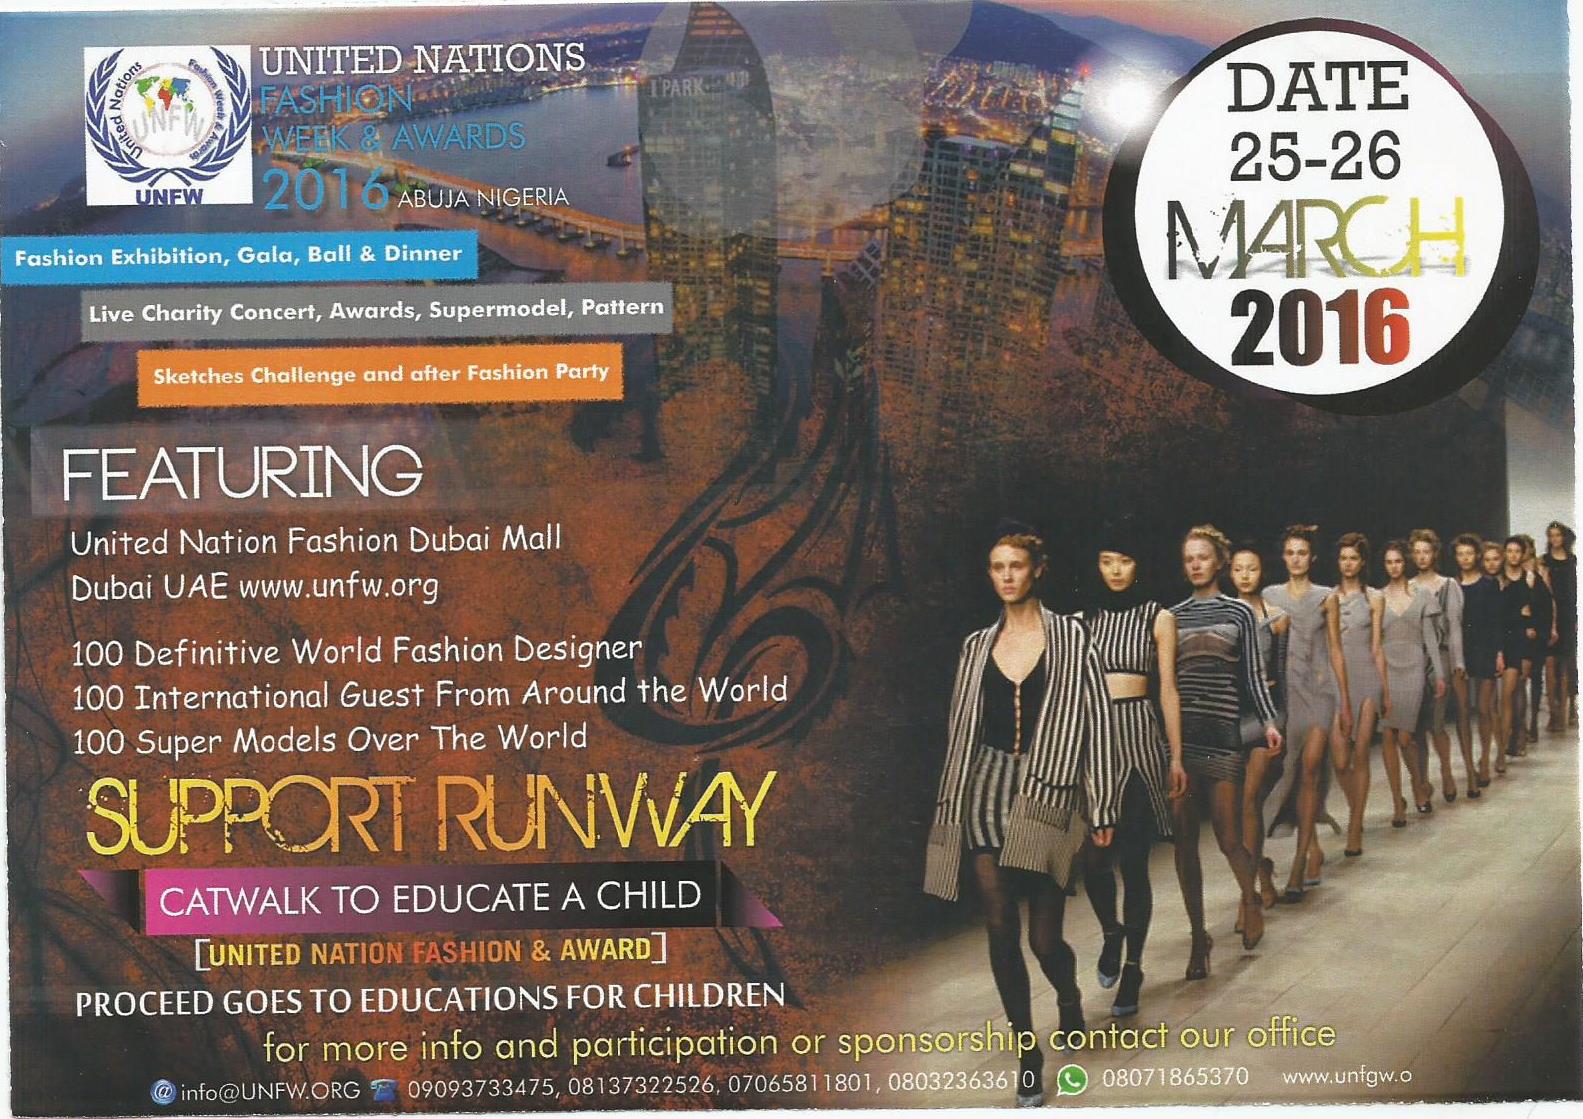 United Nations Fashion Week & Awards 2016 Abuja, Nigeria.